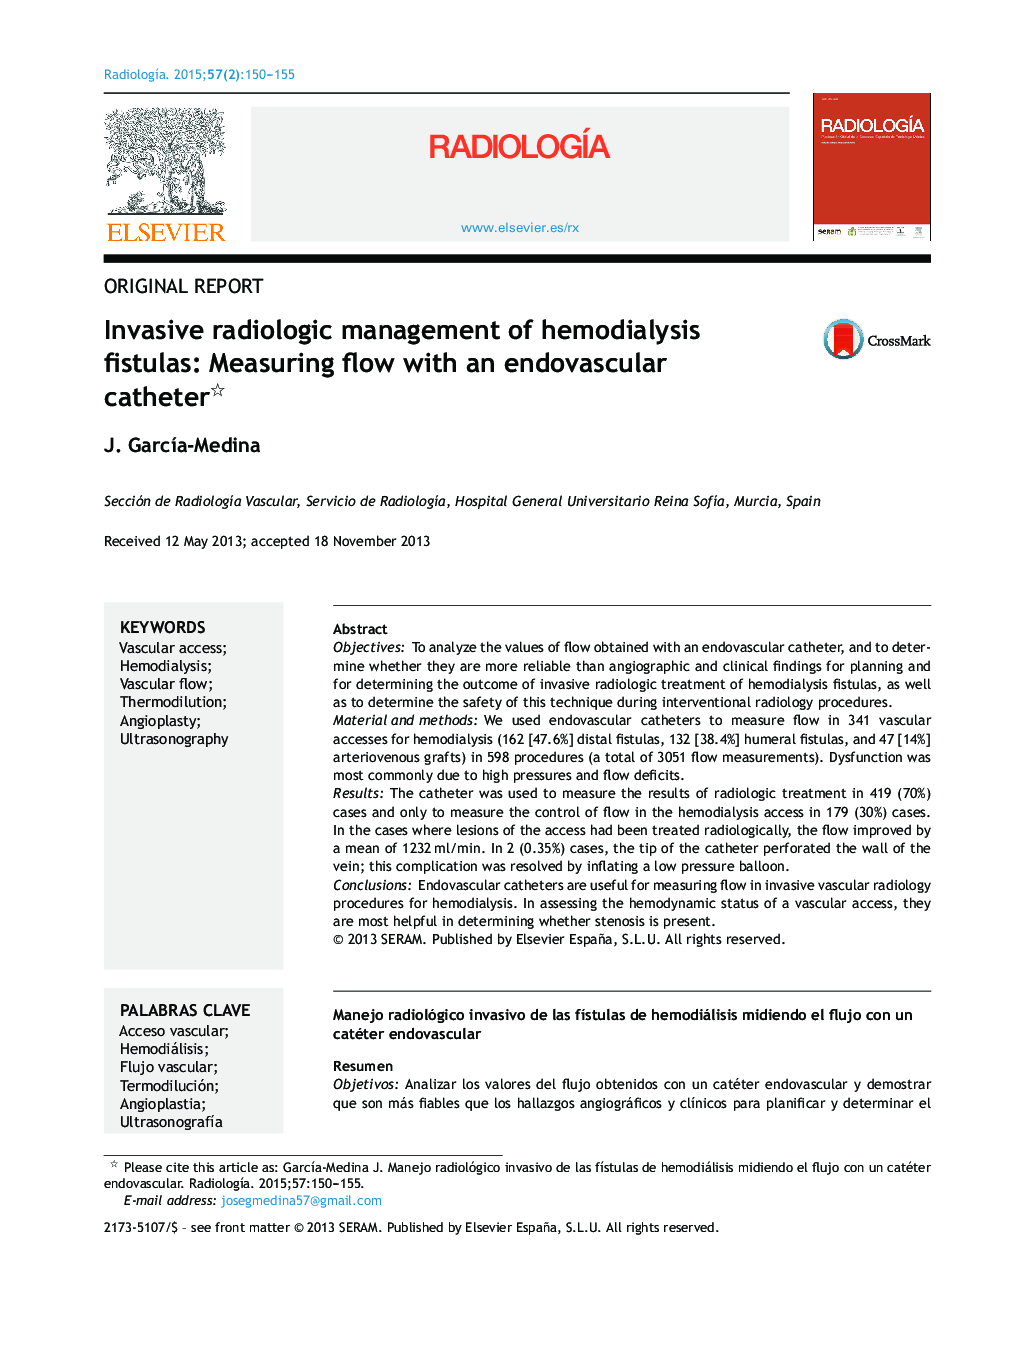 Invasive radiologic management of hemodialysis fistulas: Measuring flow with an endovascular catheter 